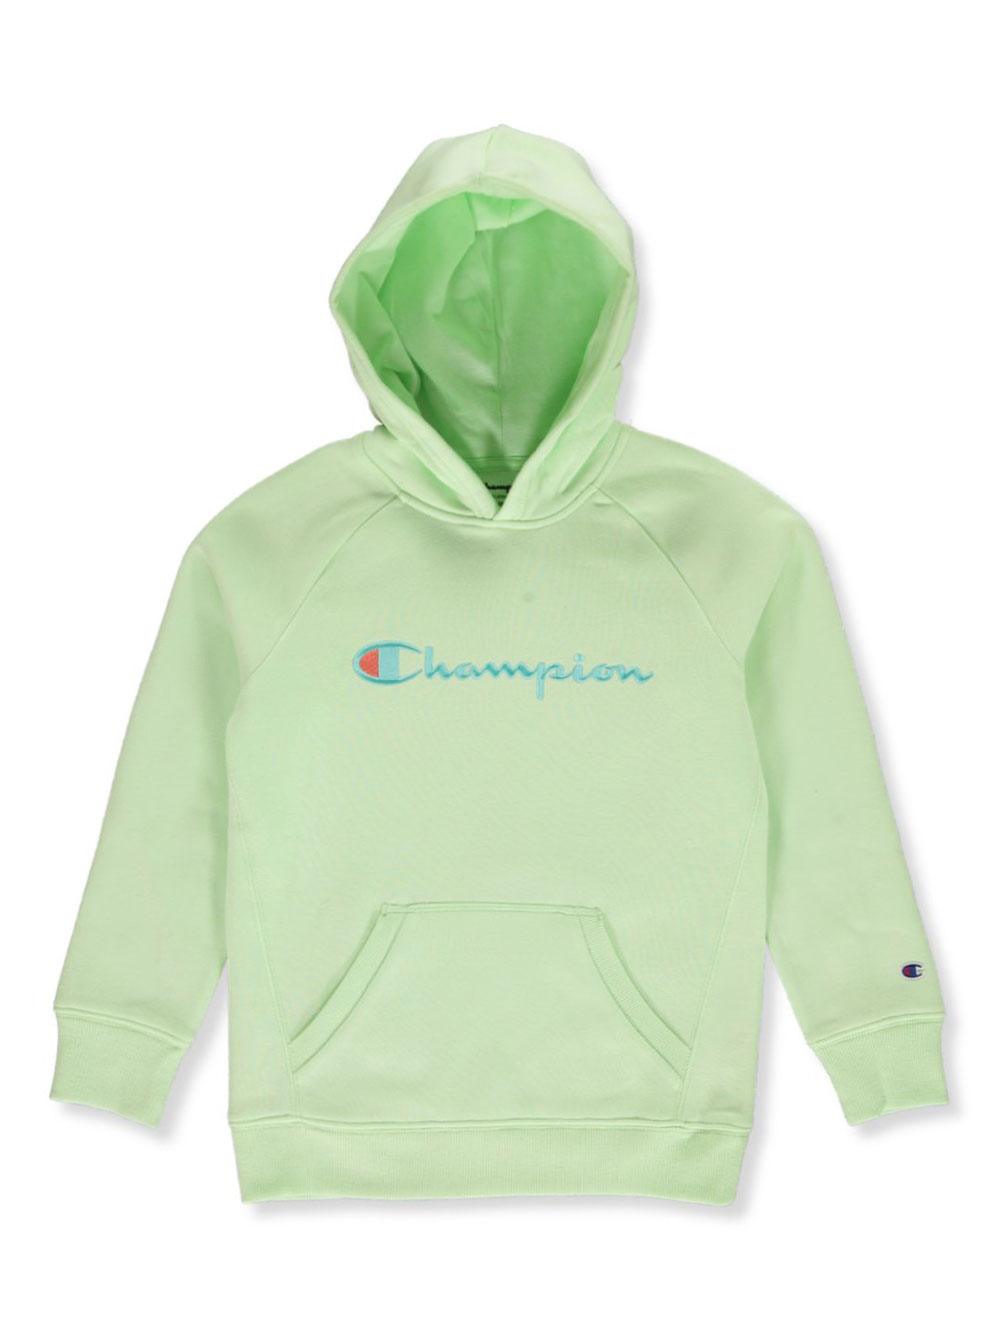 lemon champion hoodie